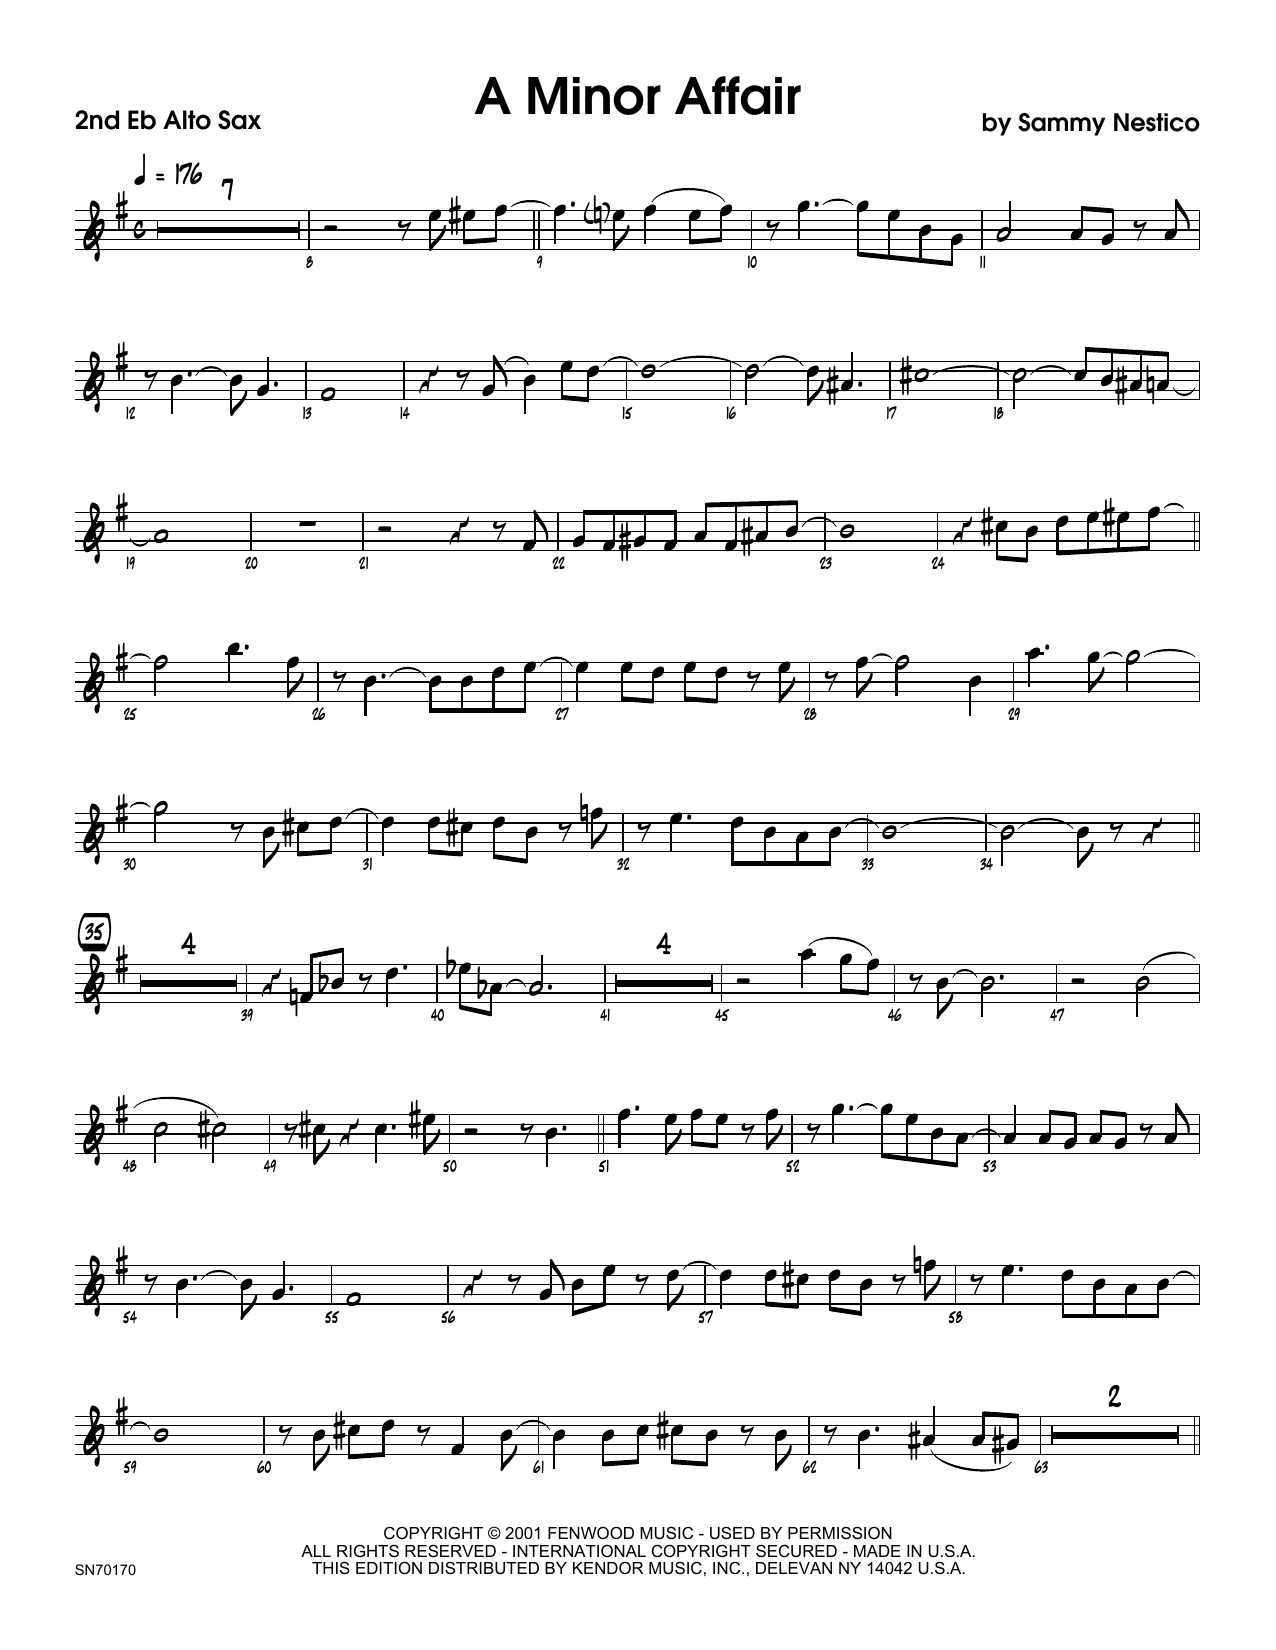 Download Sammy Nestico A Minor Affair - 2nd Eb Alto Saxophone Sheet Music